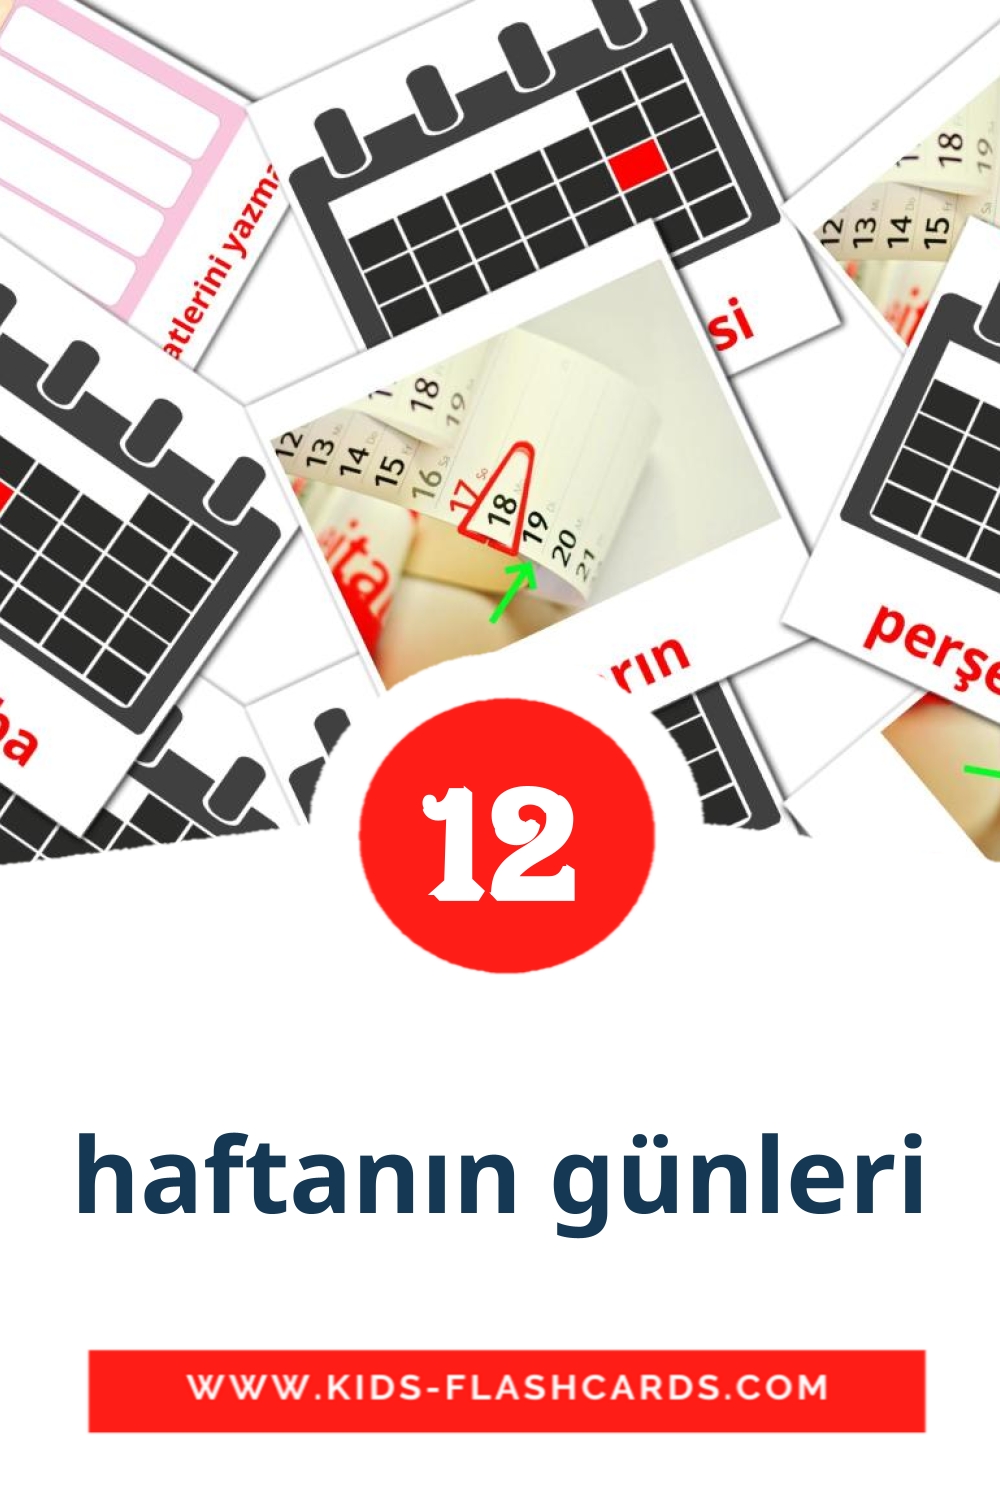 12 carte illustrate di haftanın günleri per la scuola materna in turco